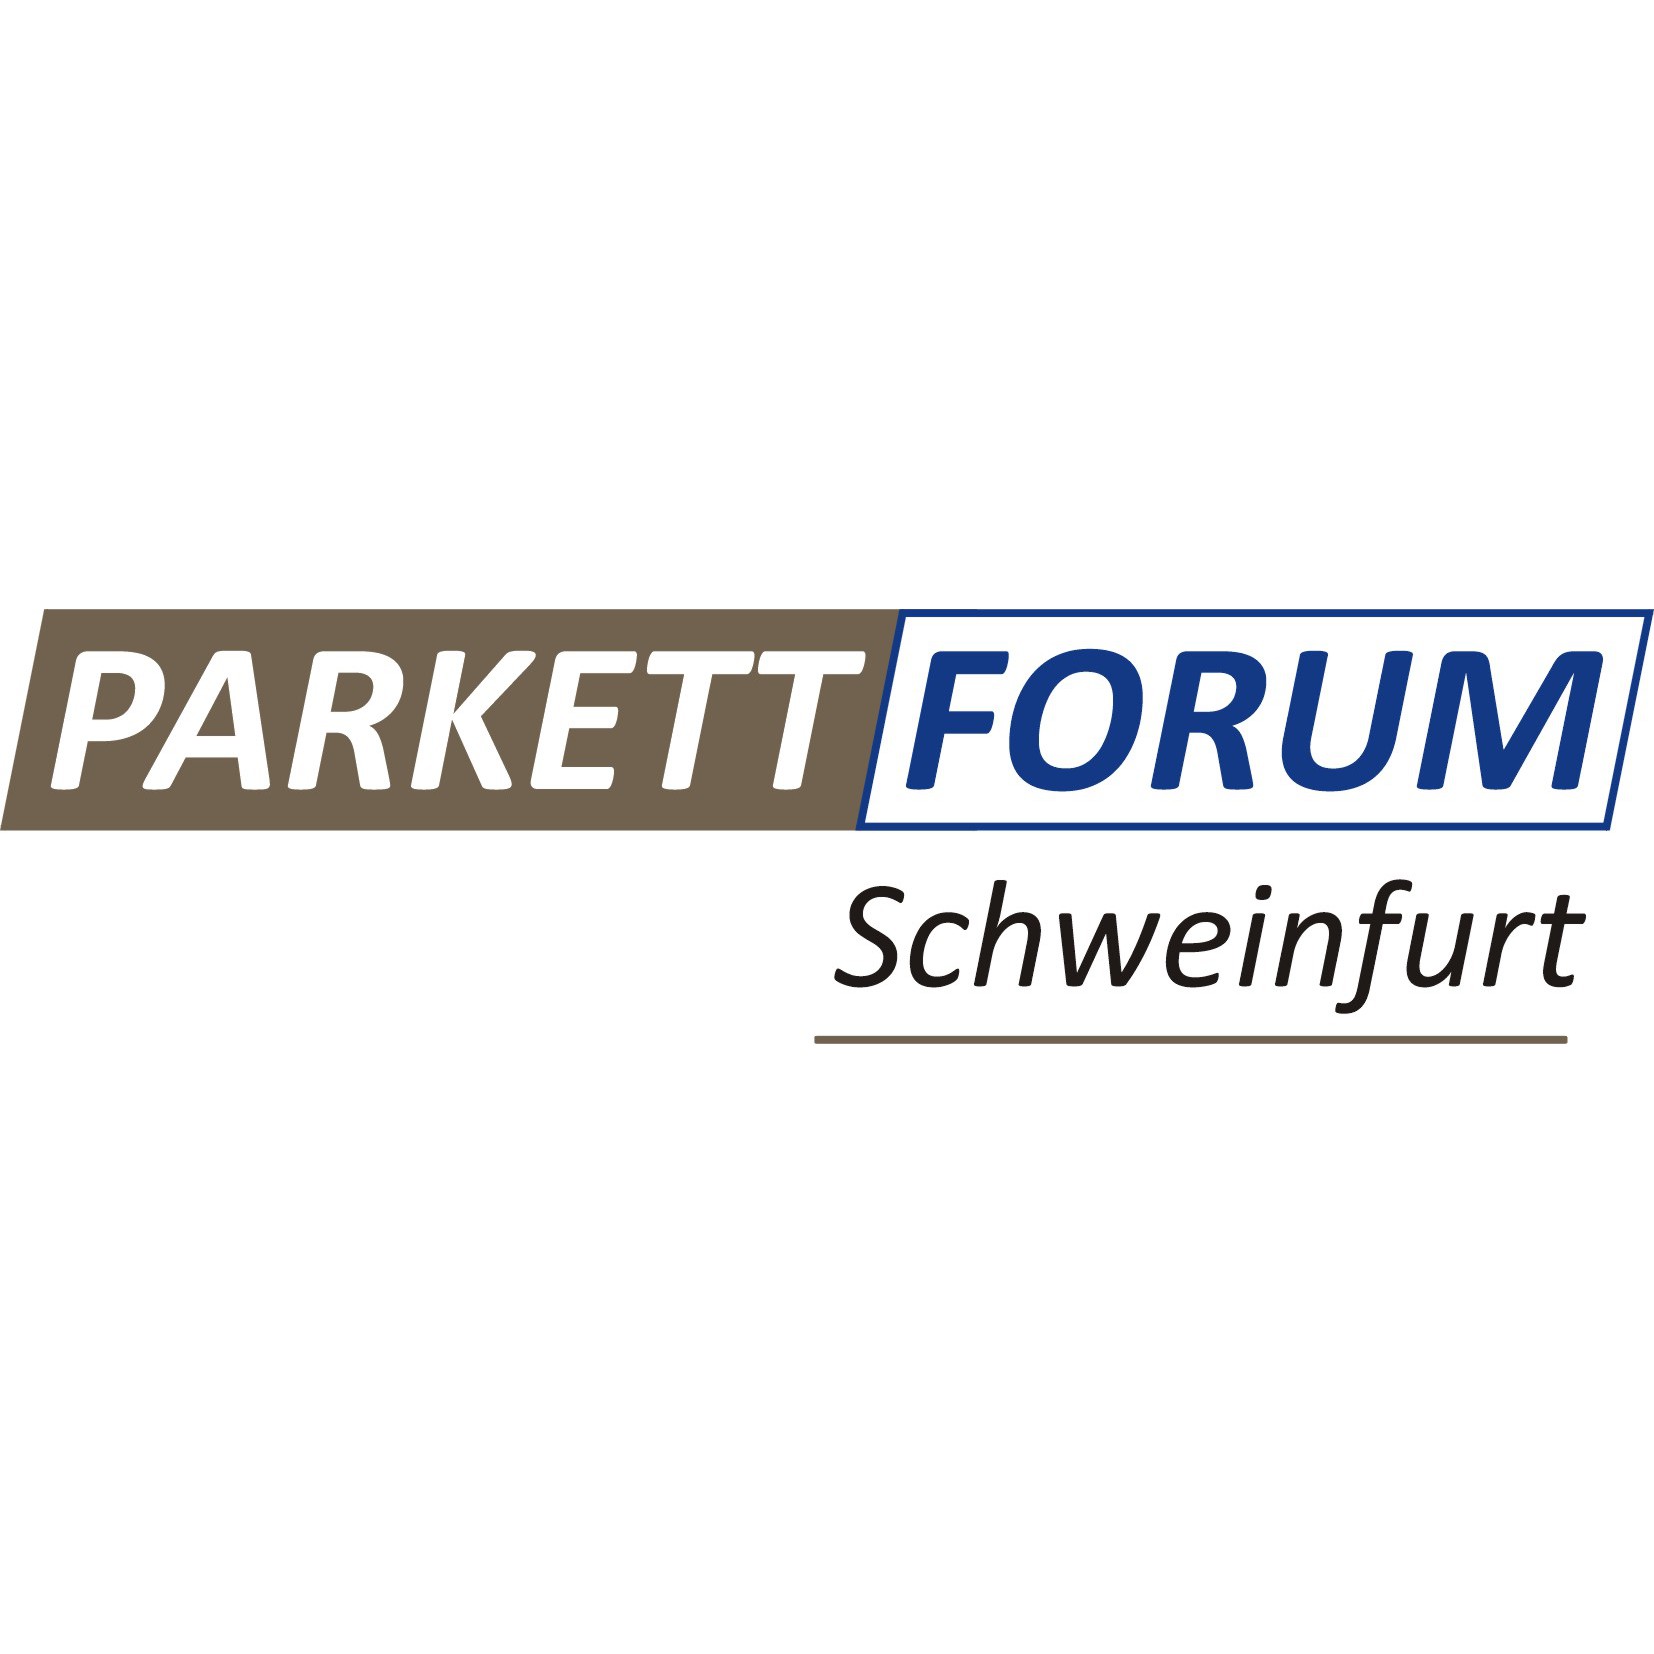 Parkett-Forum Schweinfurt GmbH & Co. KG in Sennfeld - Logo